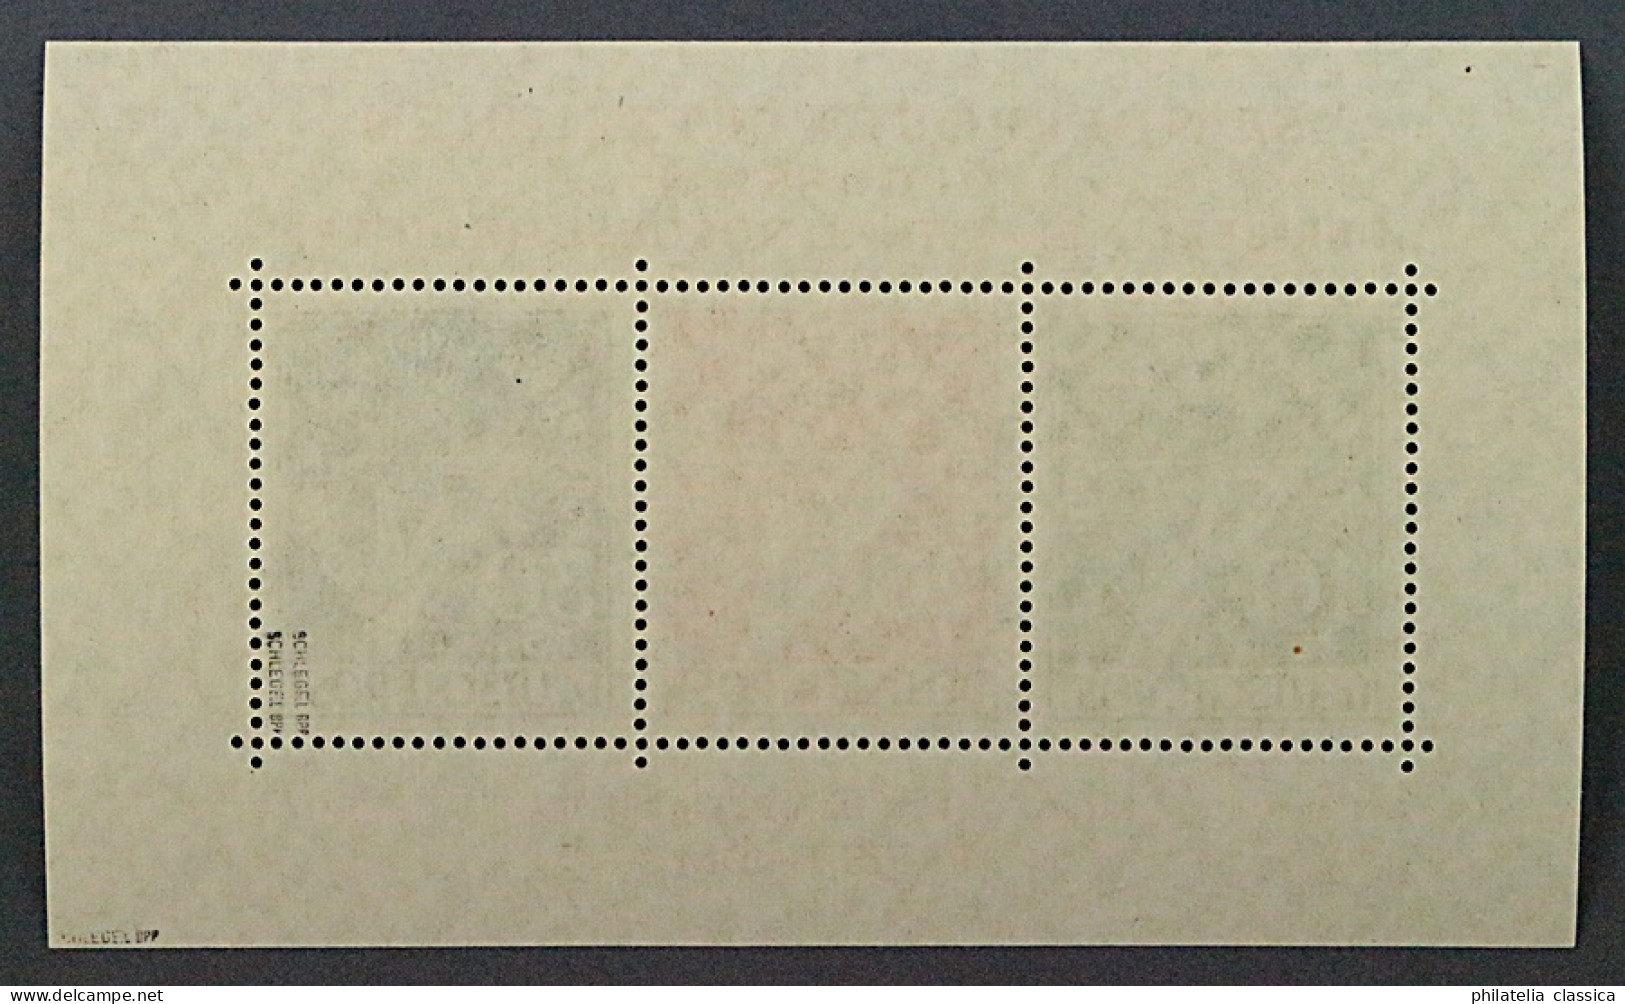 BERLIN  Bl. 1 II ** Währungs-Block, 2 PLATTENFEHLER, Fotoattest BPP, KW 2500,- € - Unused Stamps